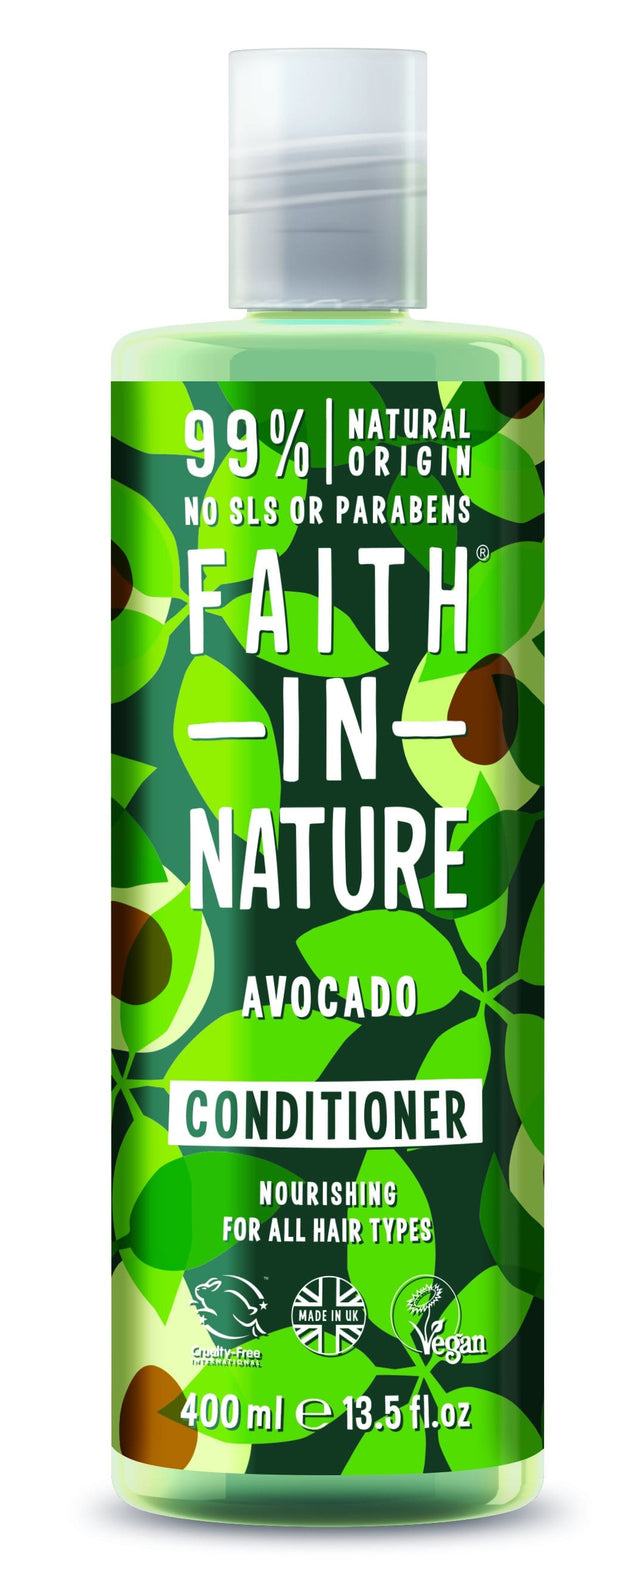 Faith in Nature Avocado Conditioner, 400ml